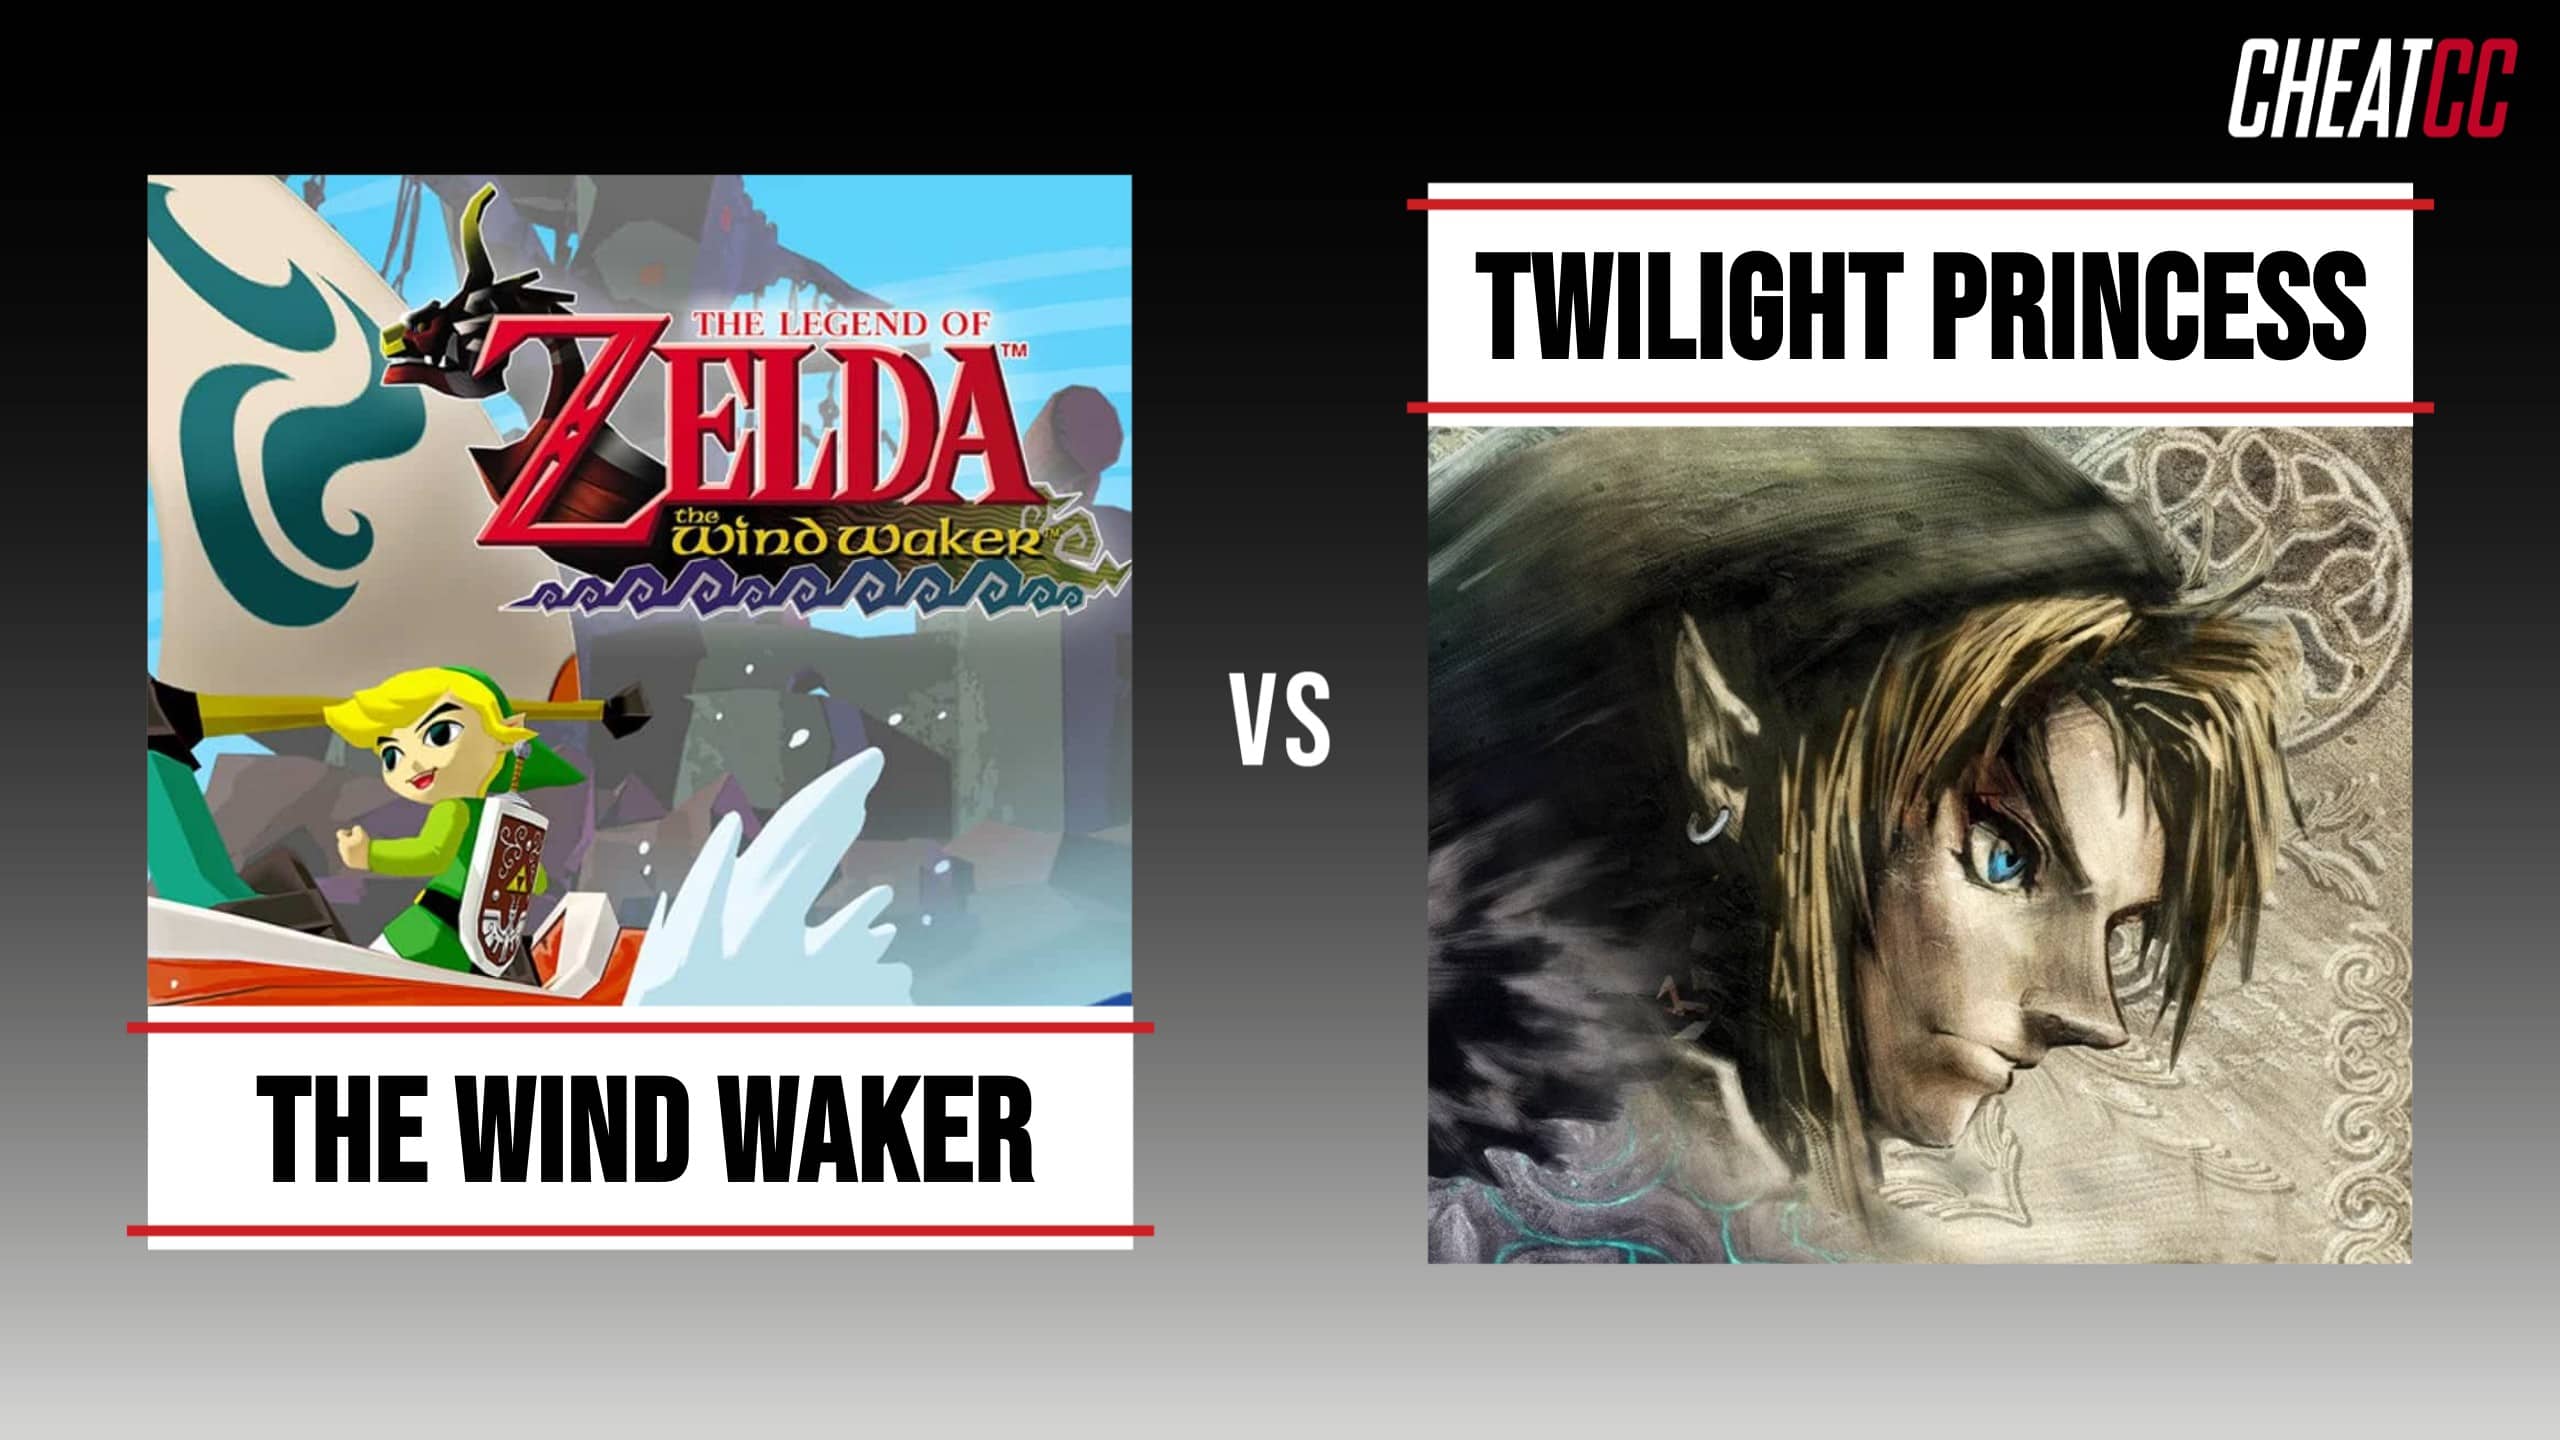 The Legend of Zelda The Wind Waker, Gamecube, Wii U, Switch, 3DS